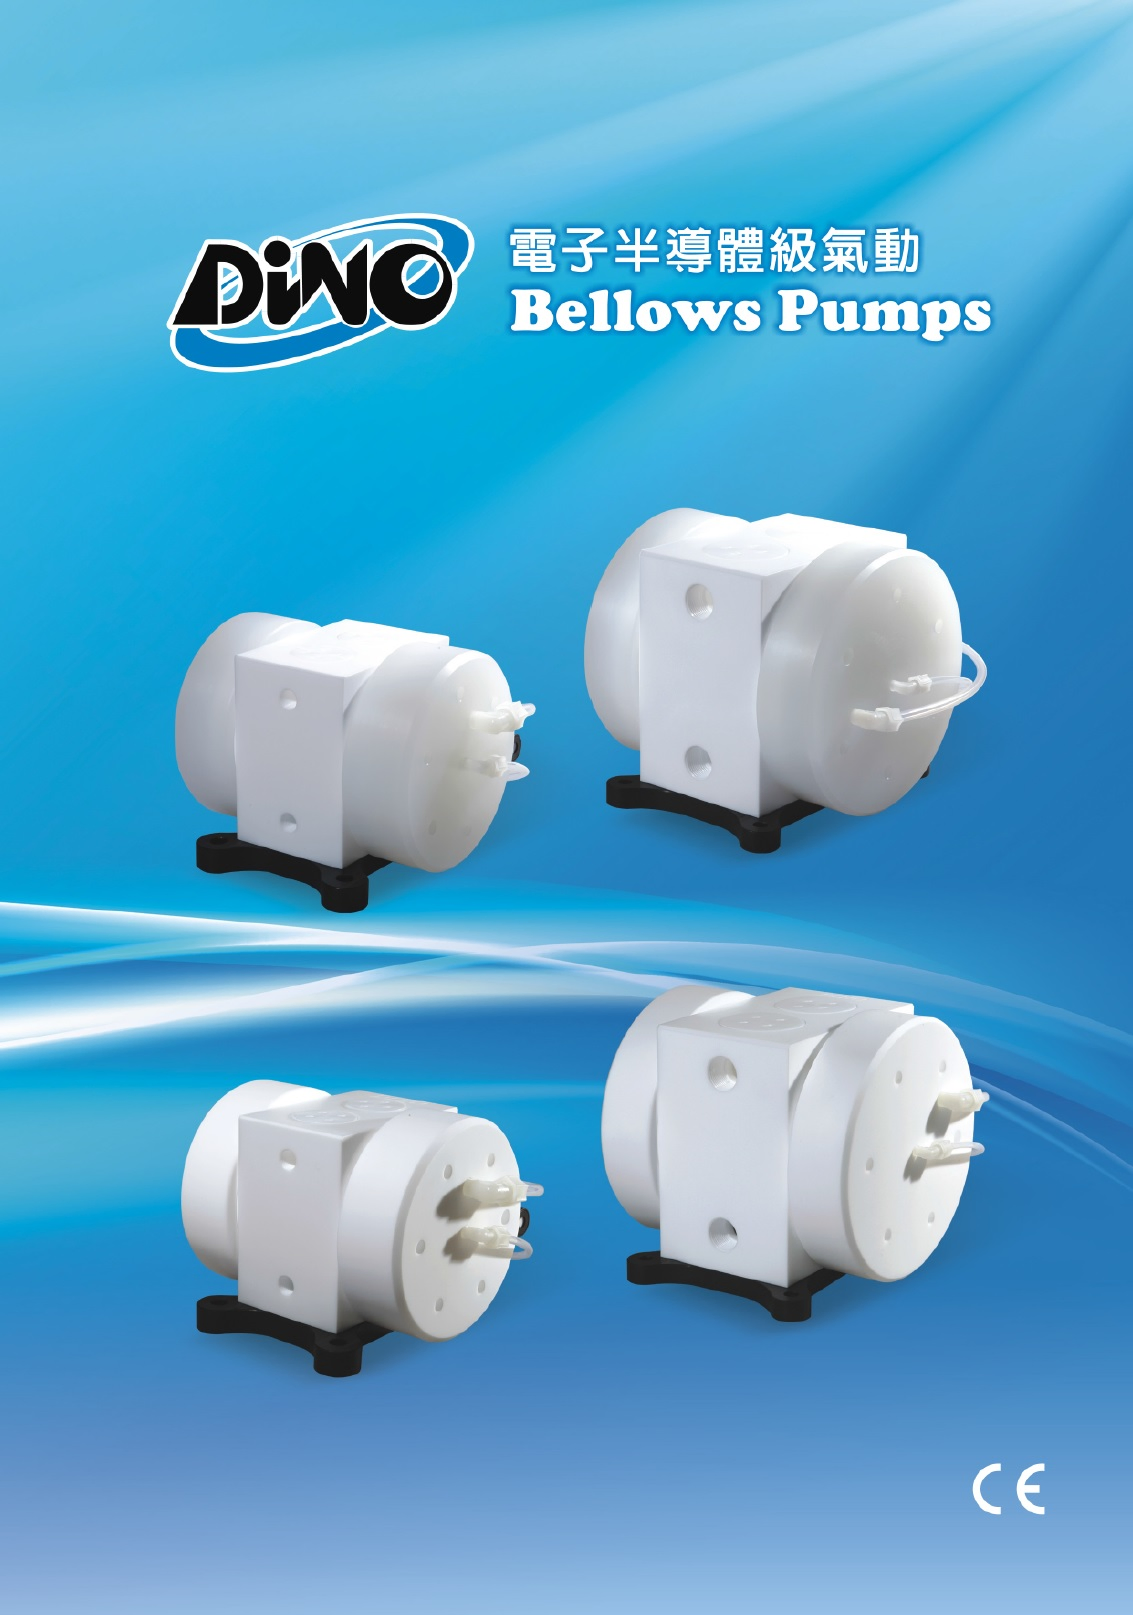 dino bellows pump